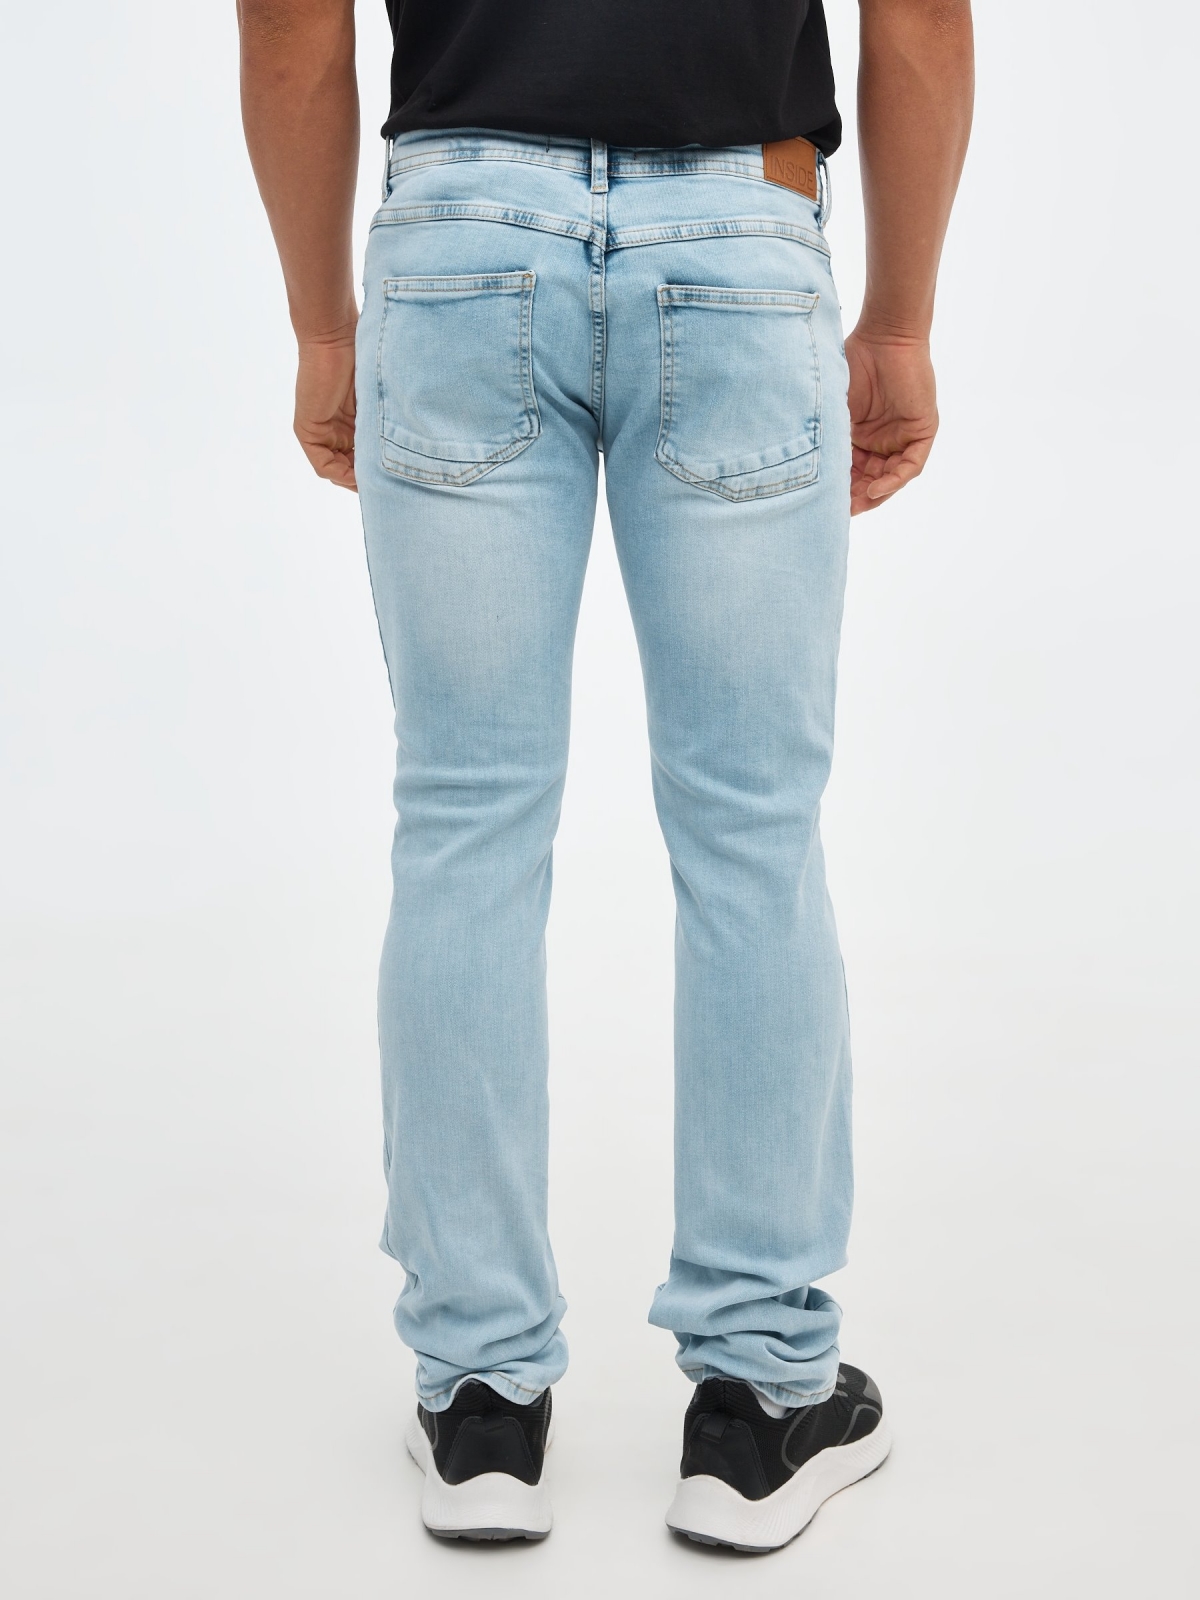 Jeans regular denim rotos azul vista general frontal